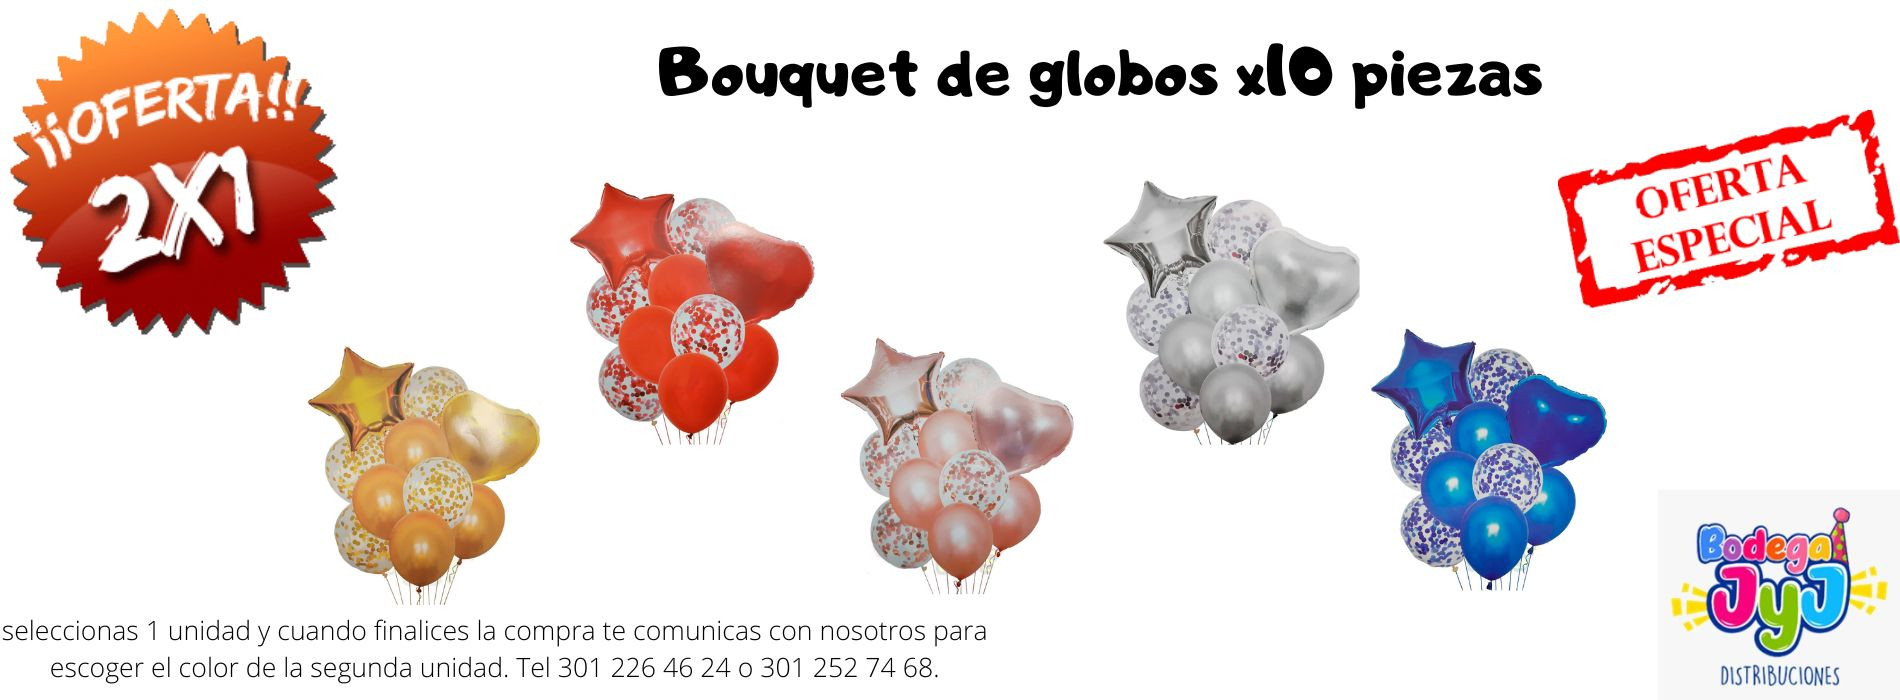 https://www.pinateriatufiesta.com/bouquet-de-globos-x-10-pcs